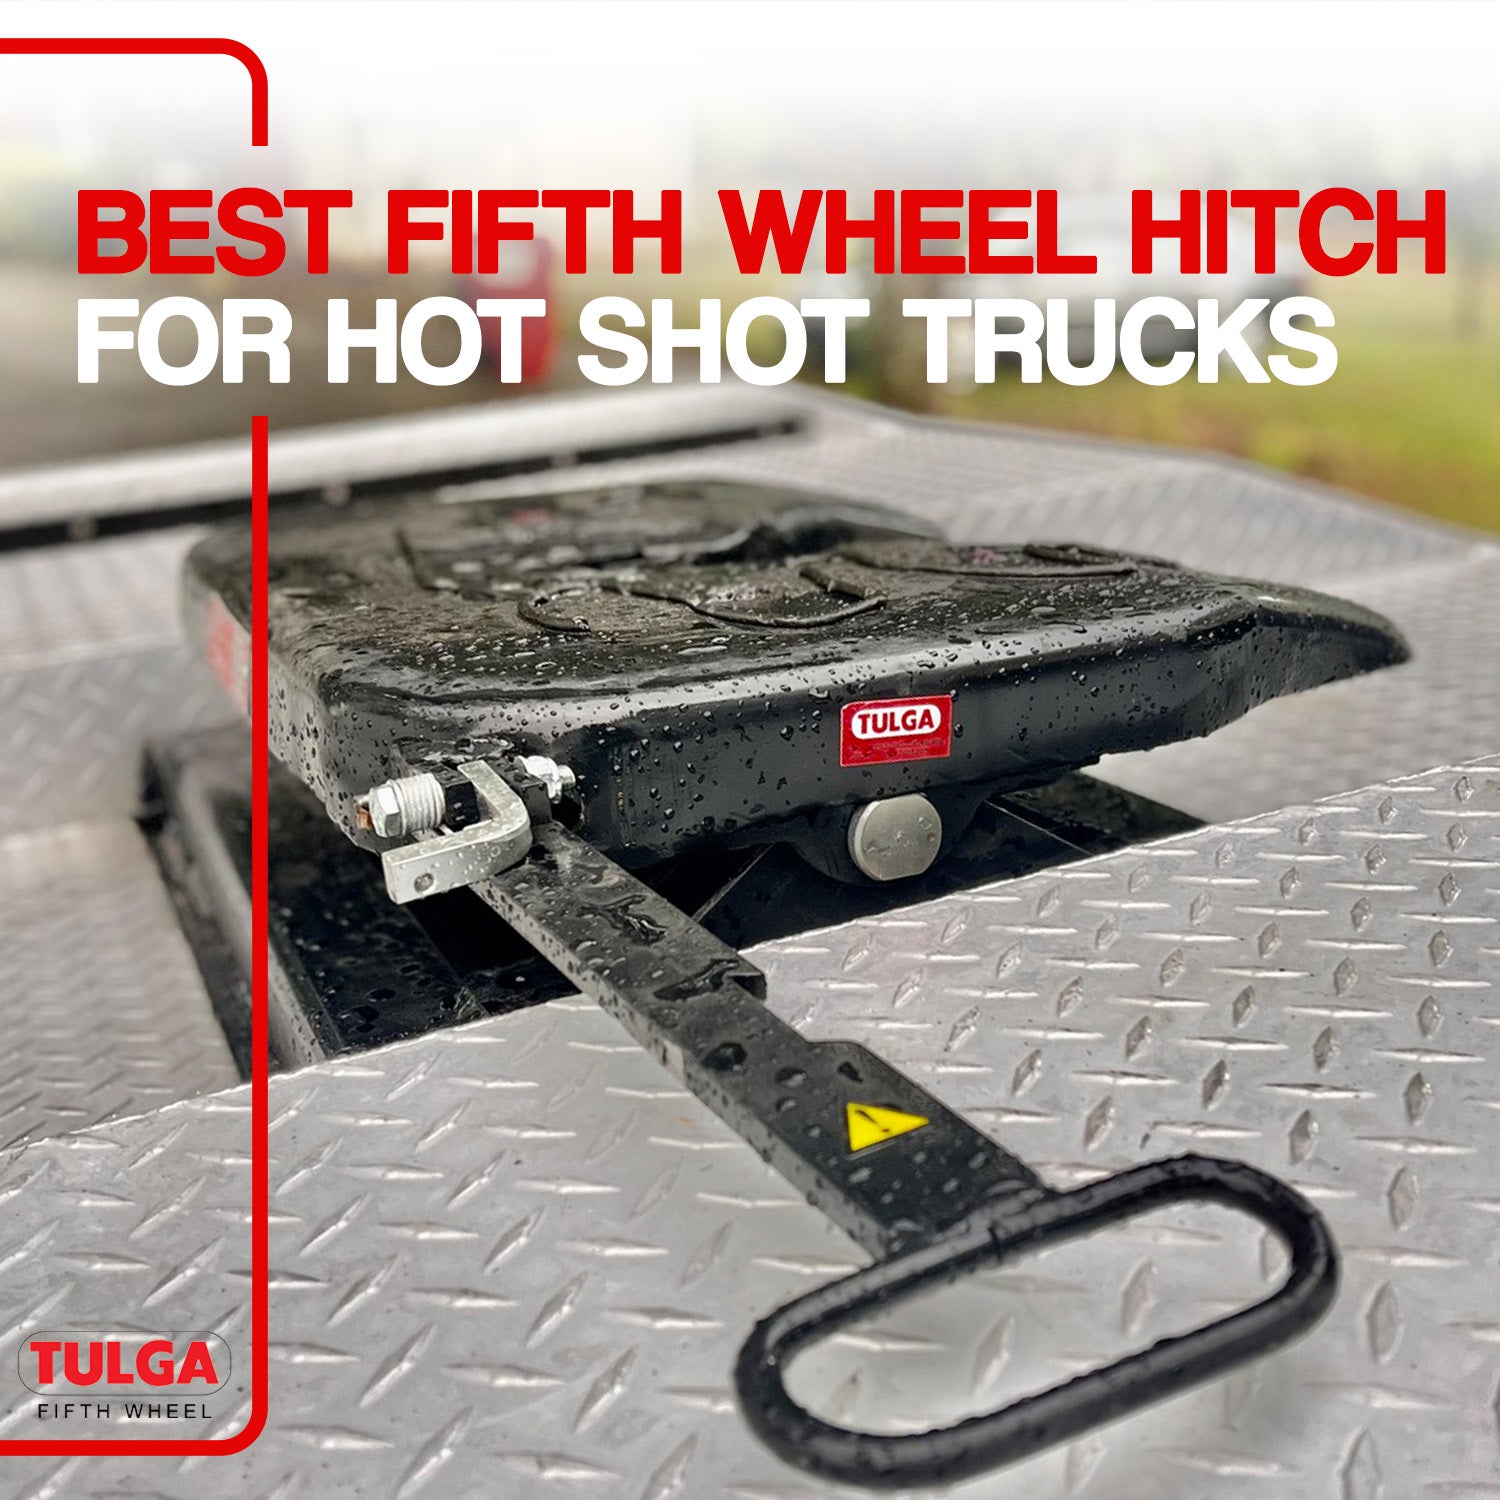 Best Fifth Wheel Hitch for Hot Shot Trucks